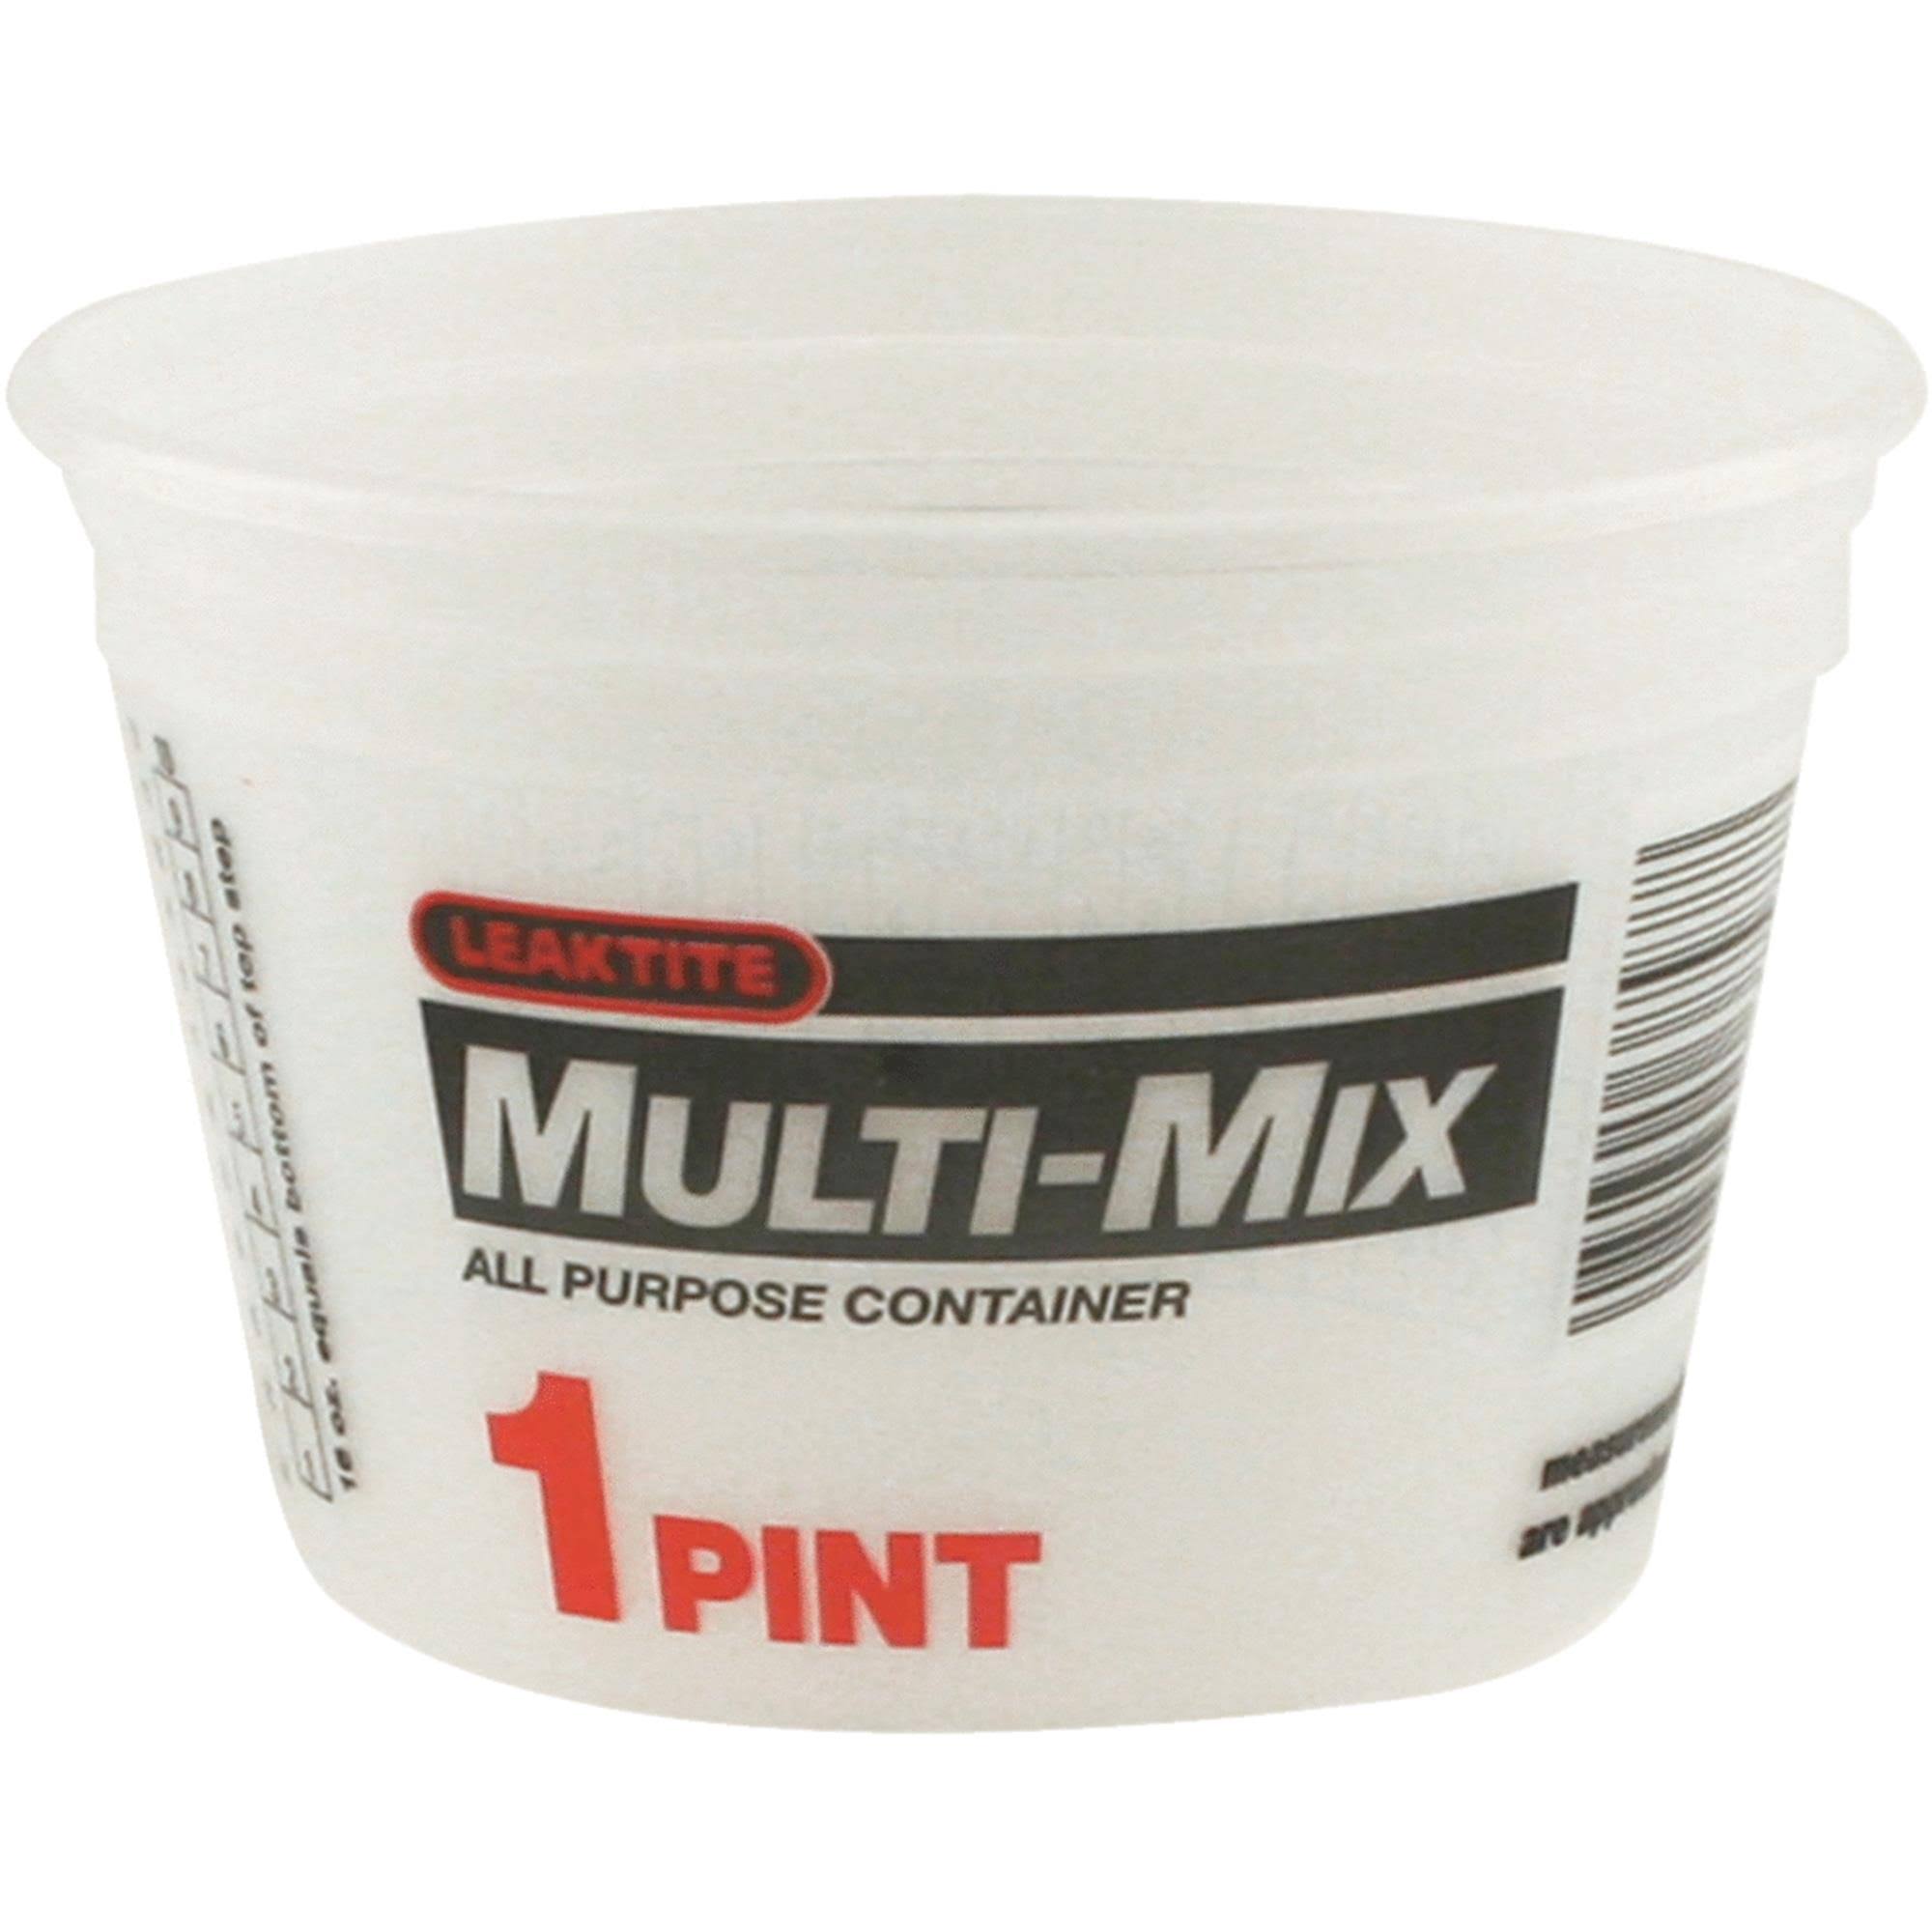 Leaktite Multi-Mix Container - 1 Pint